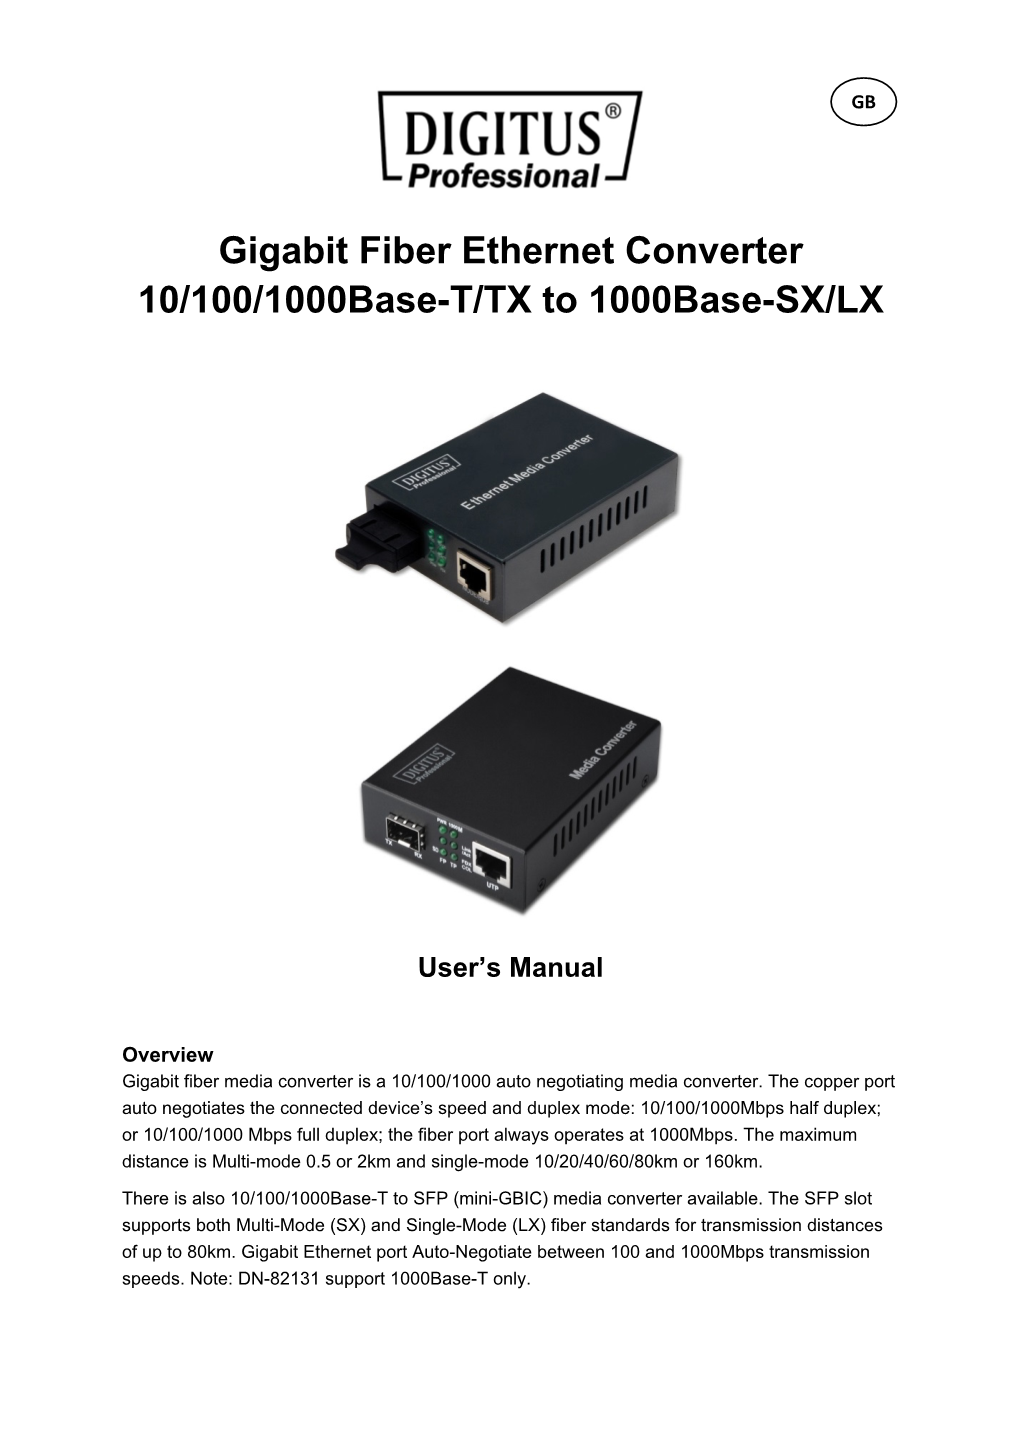 Gigabit Fiber Ethernet Converter 10/100/1000Base-T/TX to 1000Base-SX/LX